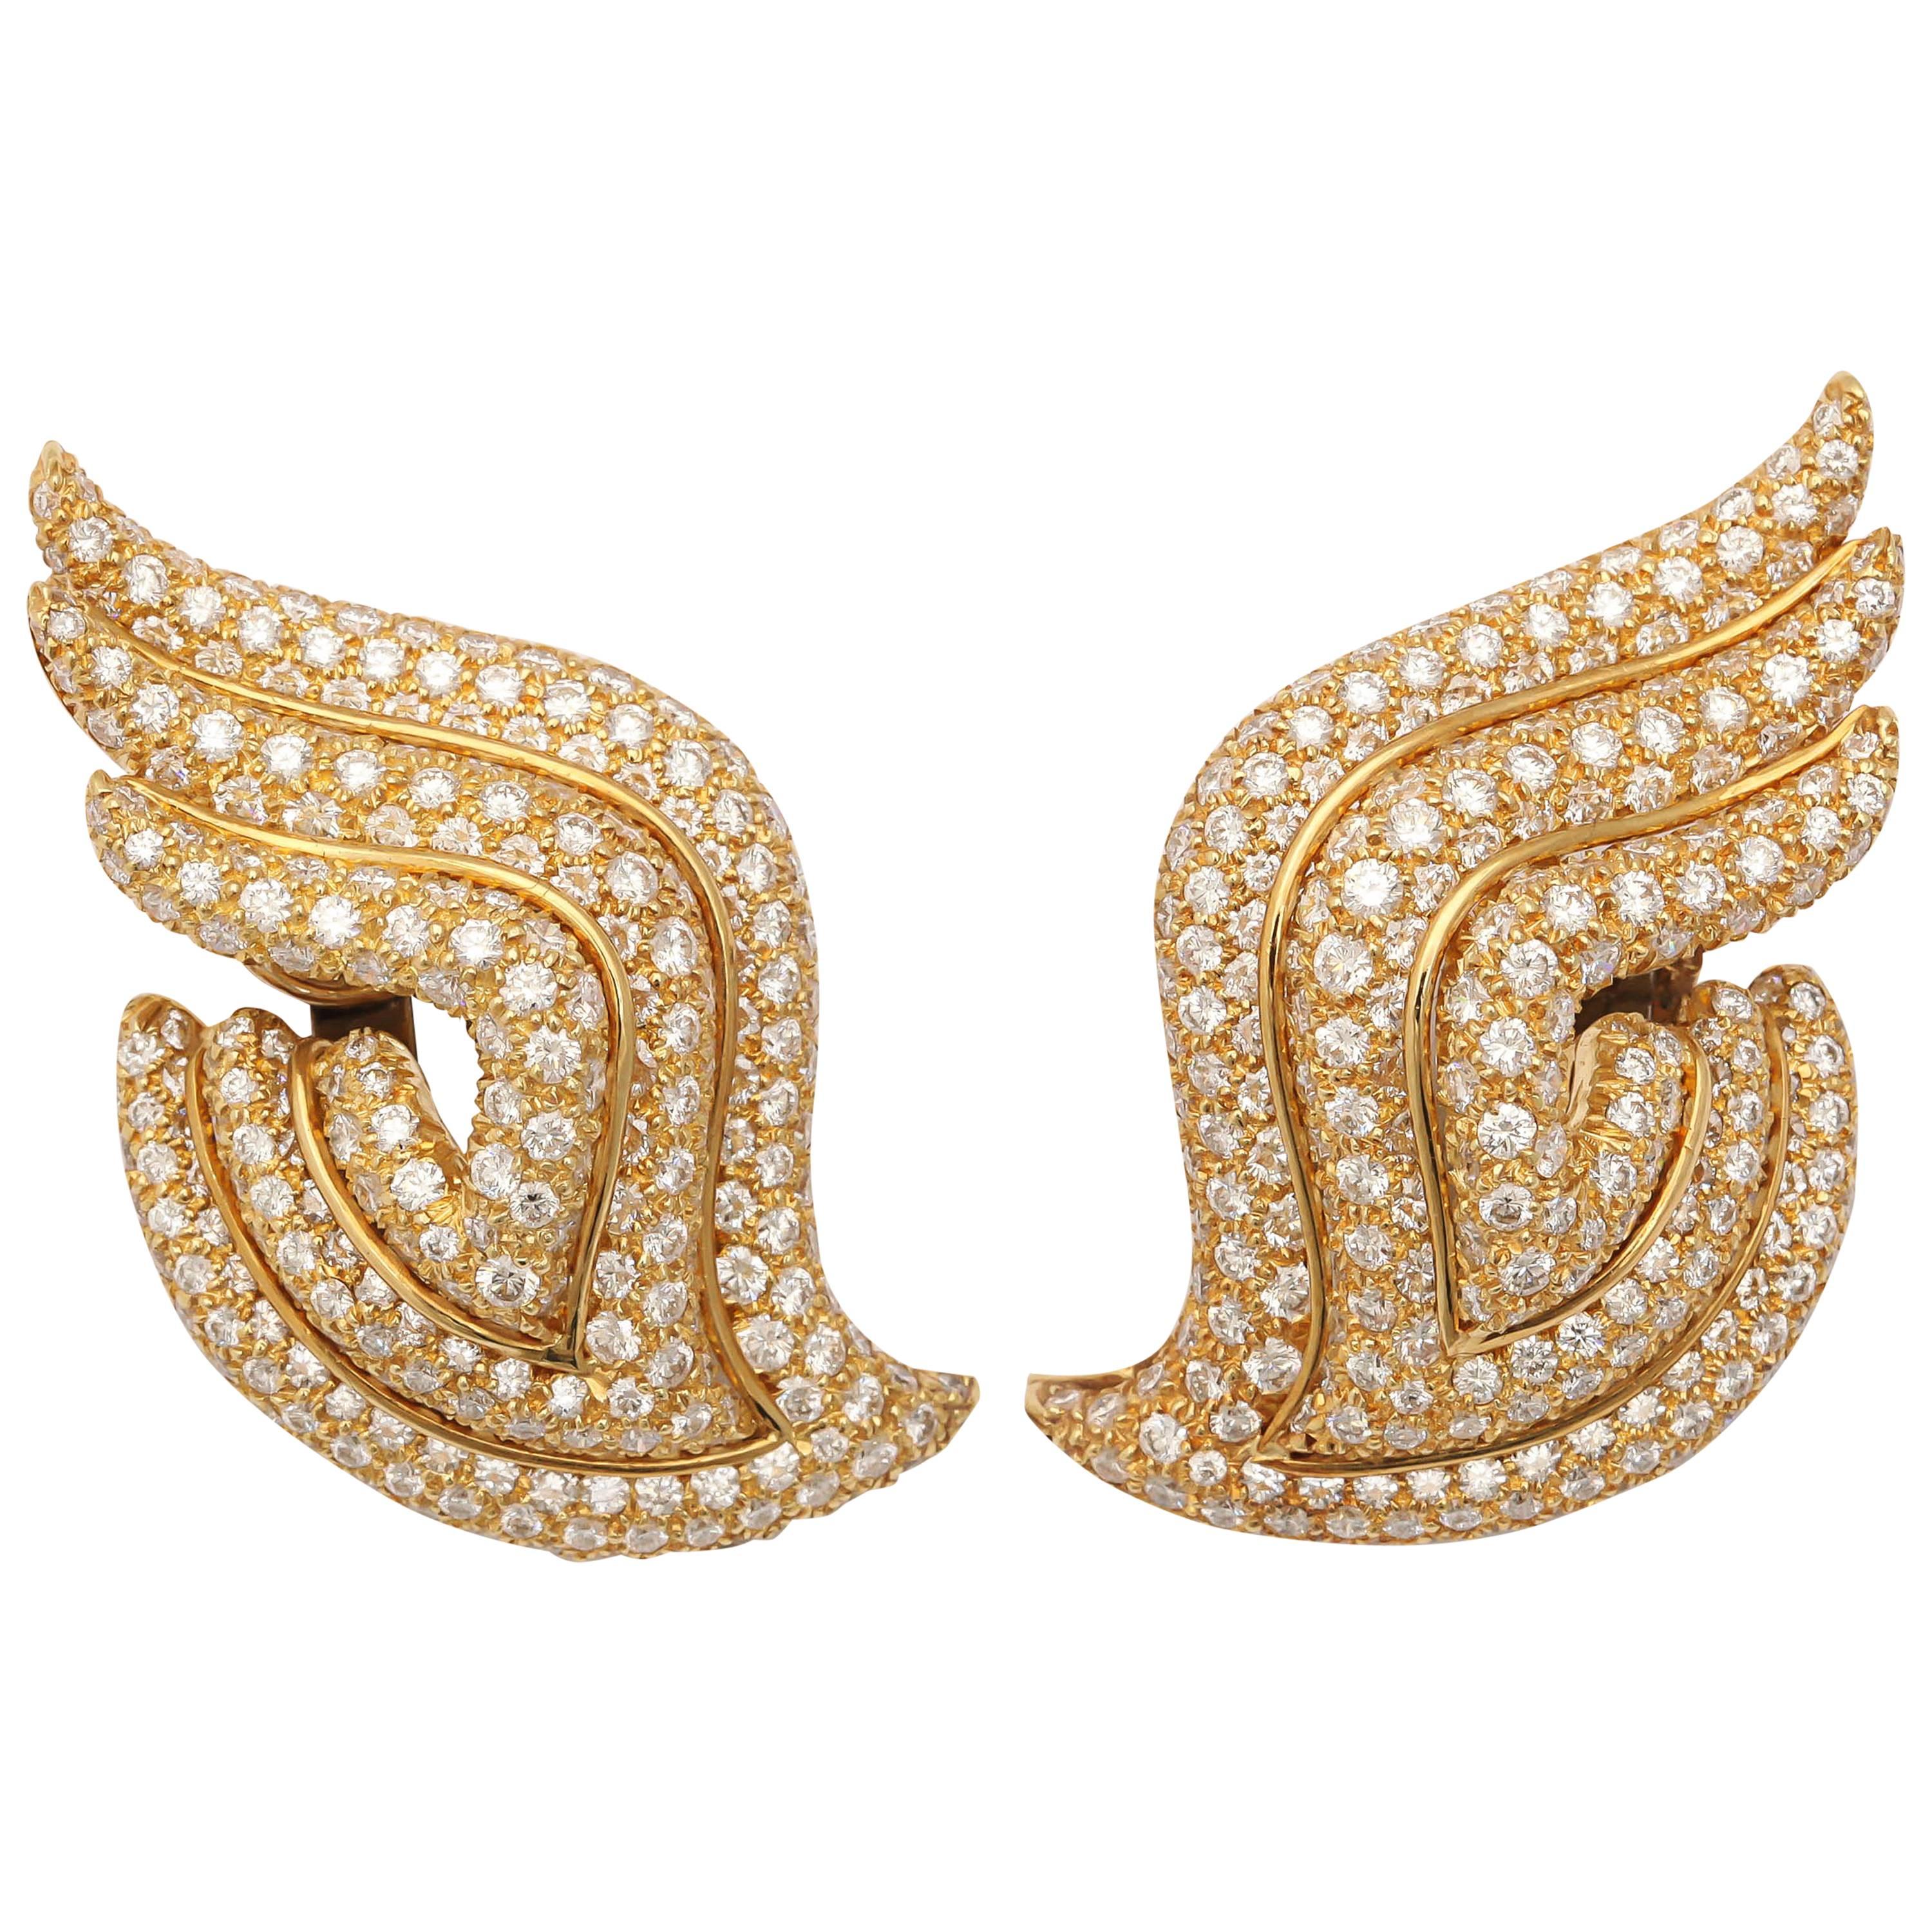 henry Dunay diamond gold Earrings